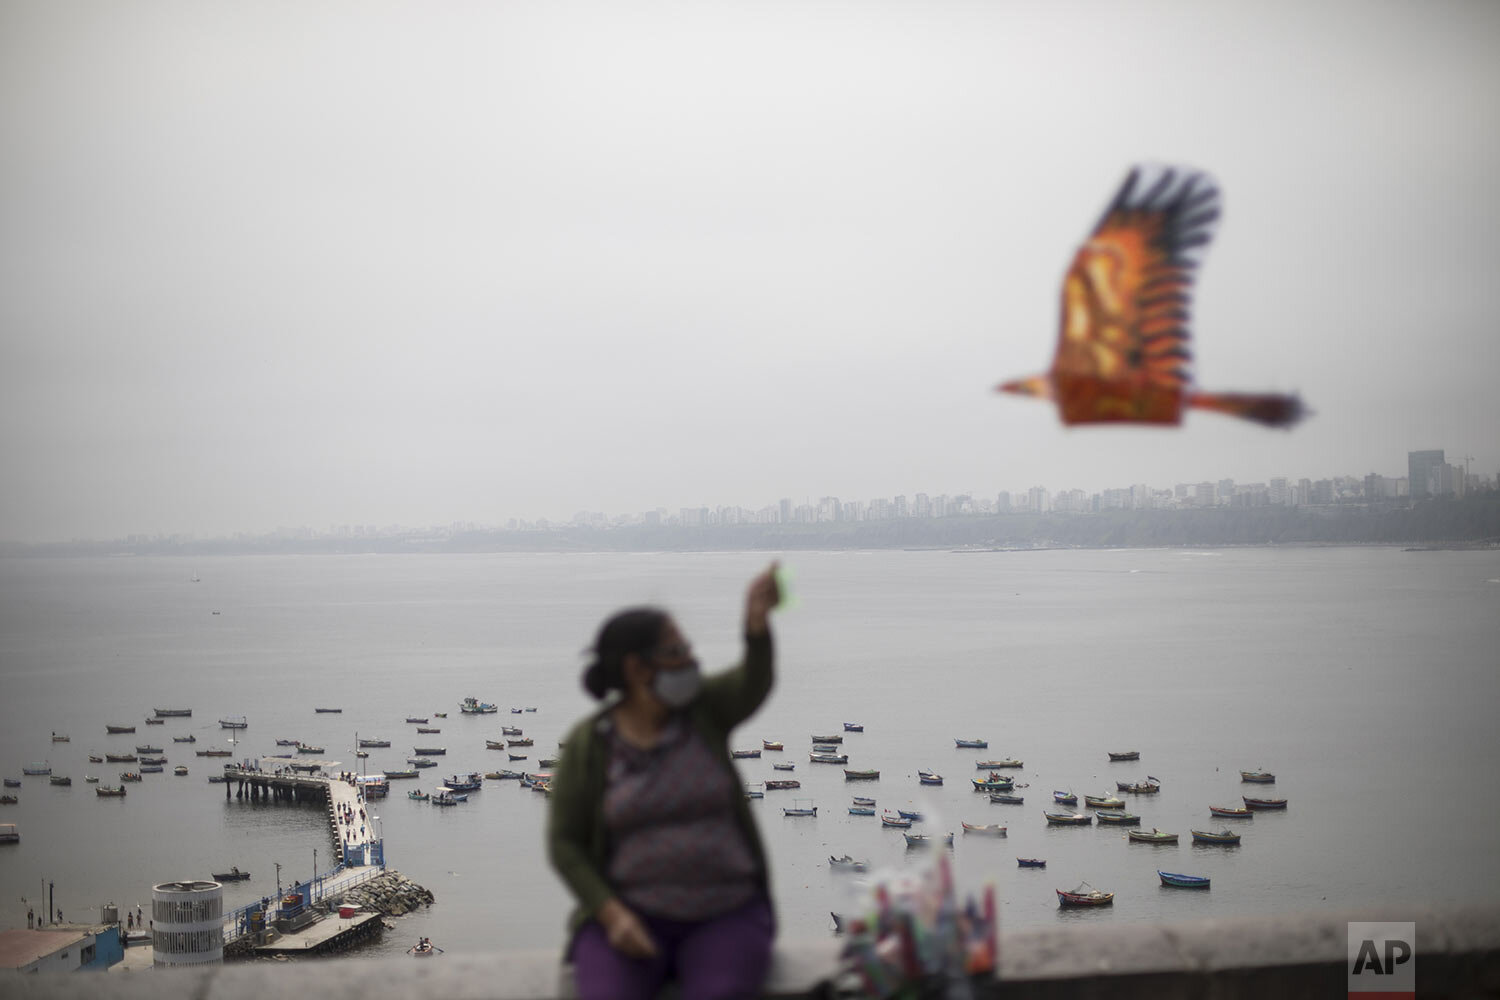  A woman sells kites on the seaside walk in the Chorrillos area of Lima, Peru, Sept. 19 2020. (AP Photo/Rodrigo Abd) 